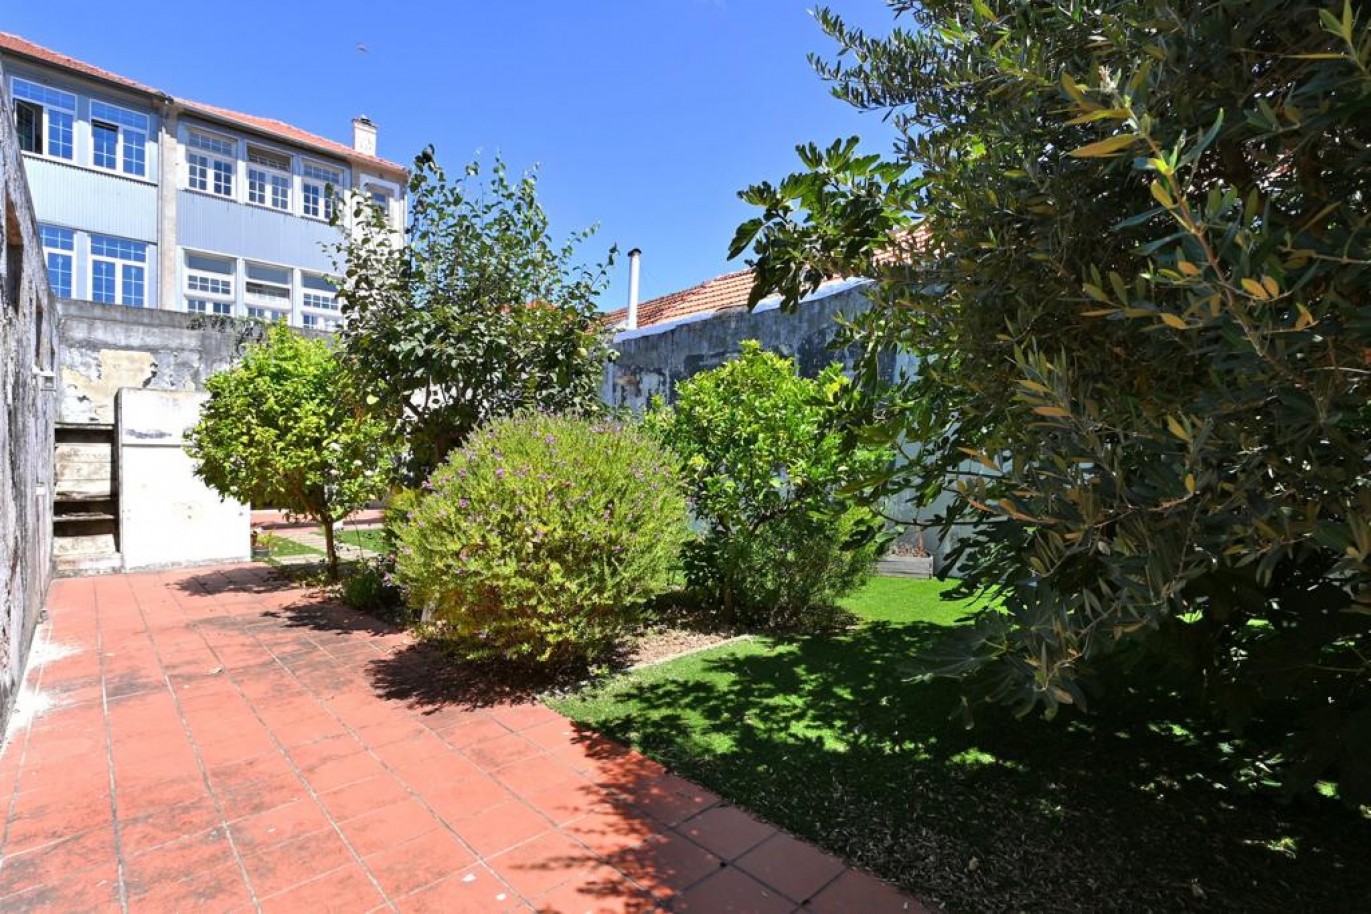 Villa mit Innenhof, zu verkaufen, in Campanhã, Porto, Portugal_204014